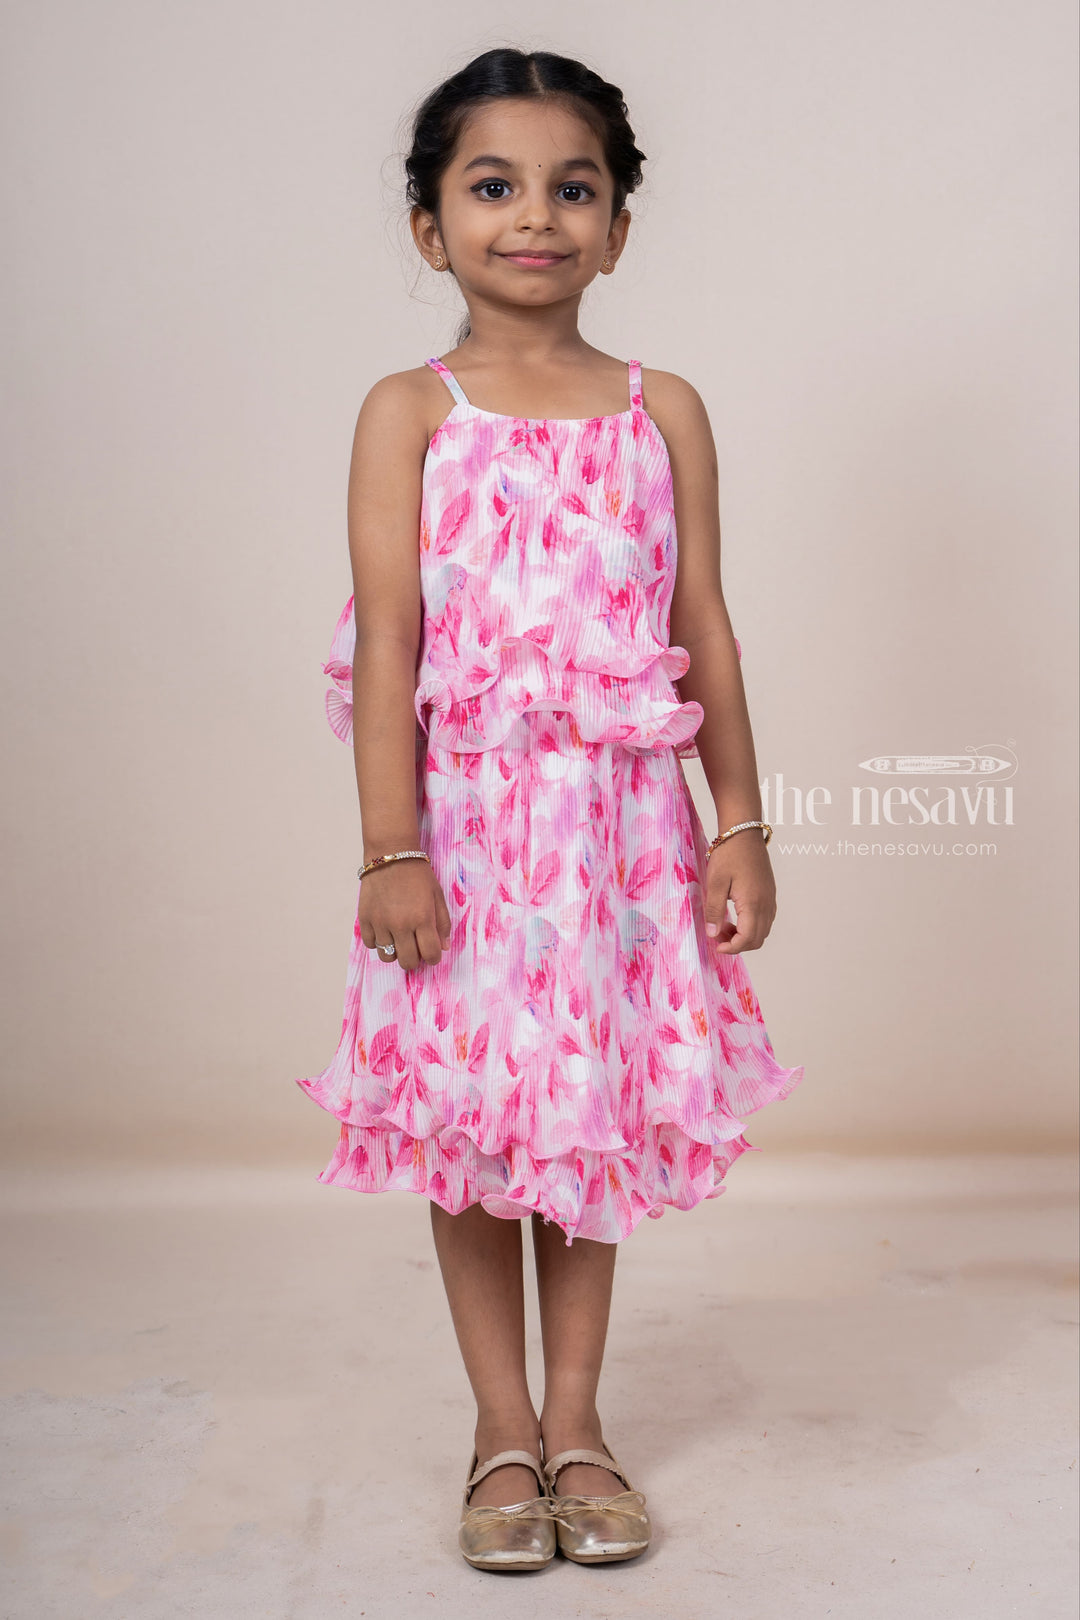 The Nesavu Baby Frock / Jhabla Pink Designer Crepe Crushed Sleeveless Casual Frock For Toddler Girls psr silks Nesavu 14 (6M) / Hotpink BFJ322B